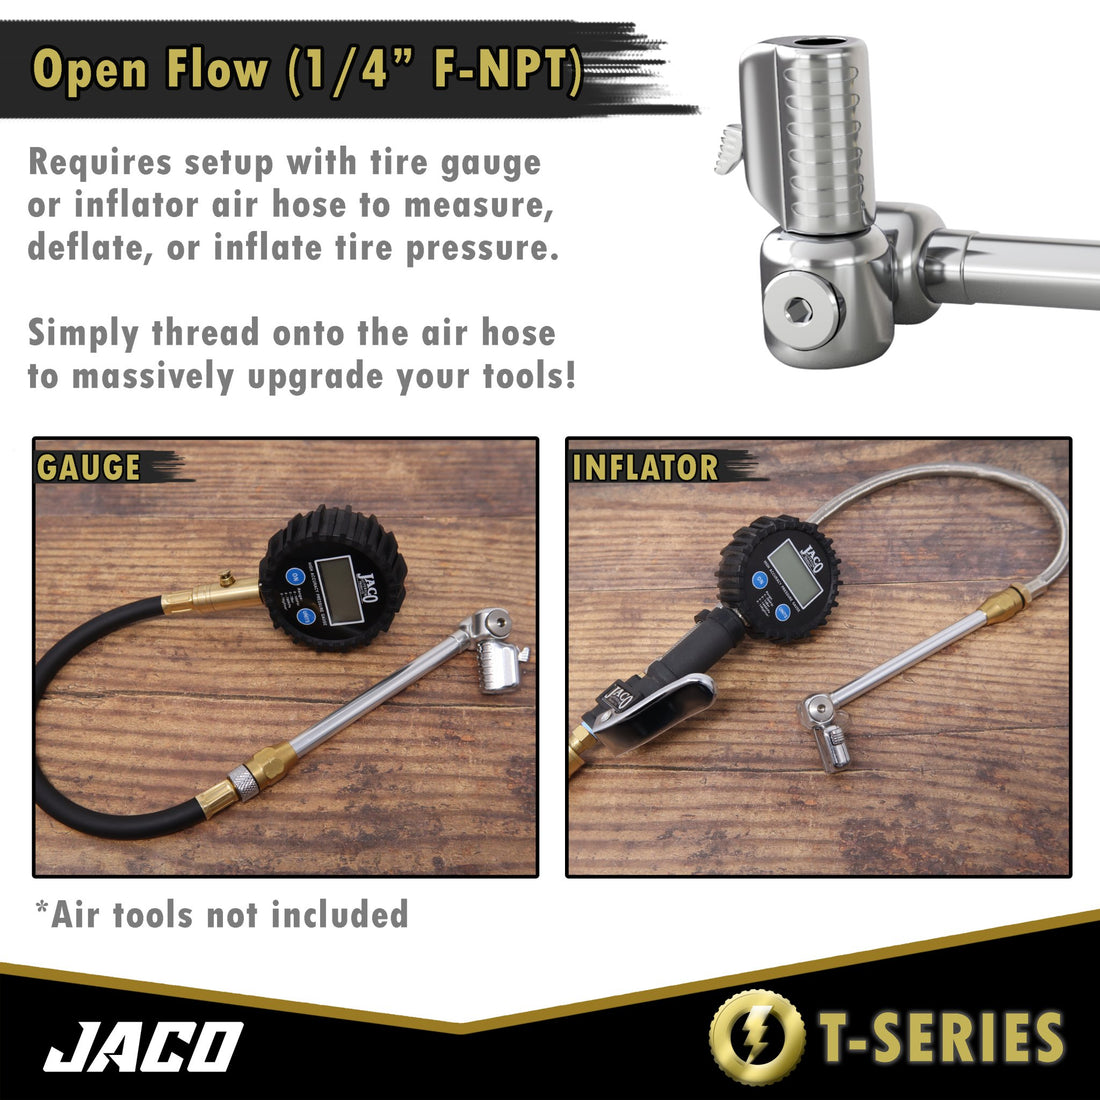 Lightning™ T-Series Tire Air Chuck | Open Flow, 1/4" F-NPT - Diesel Freak